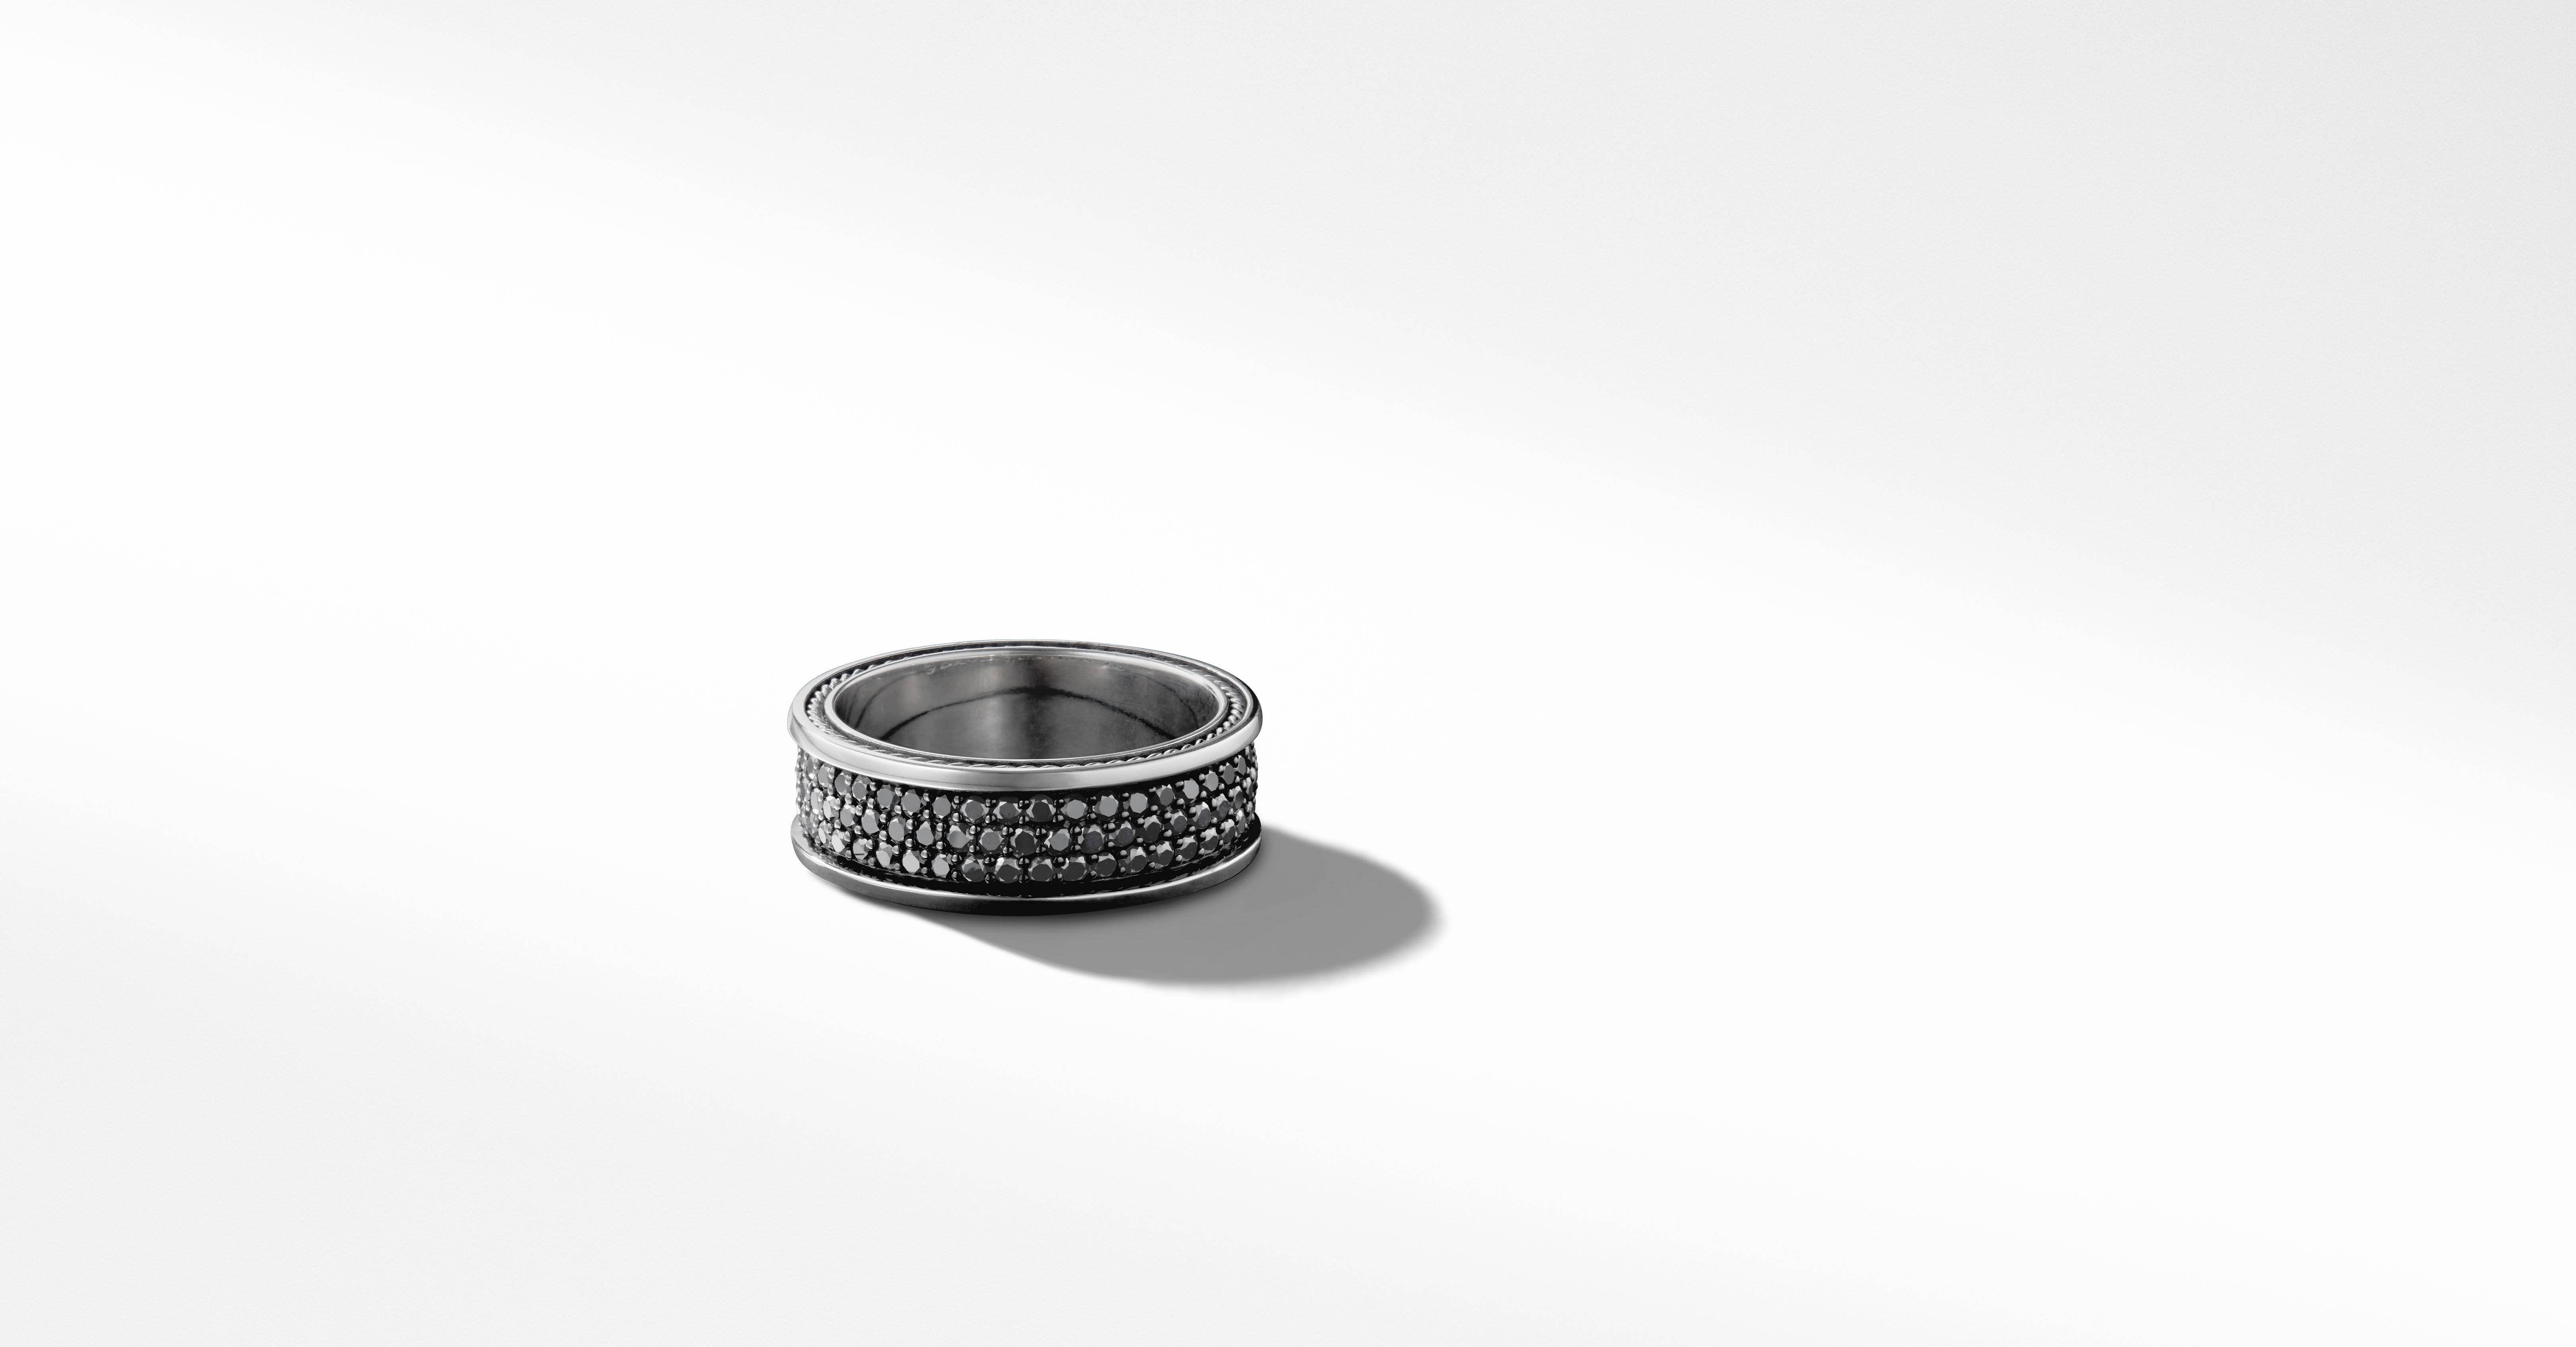 David Yurman Men's Streamline Two Row Band Ring in Black Titanium with Black Diamonds